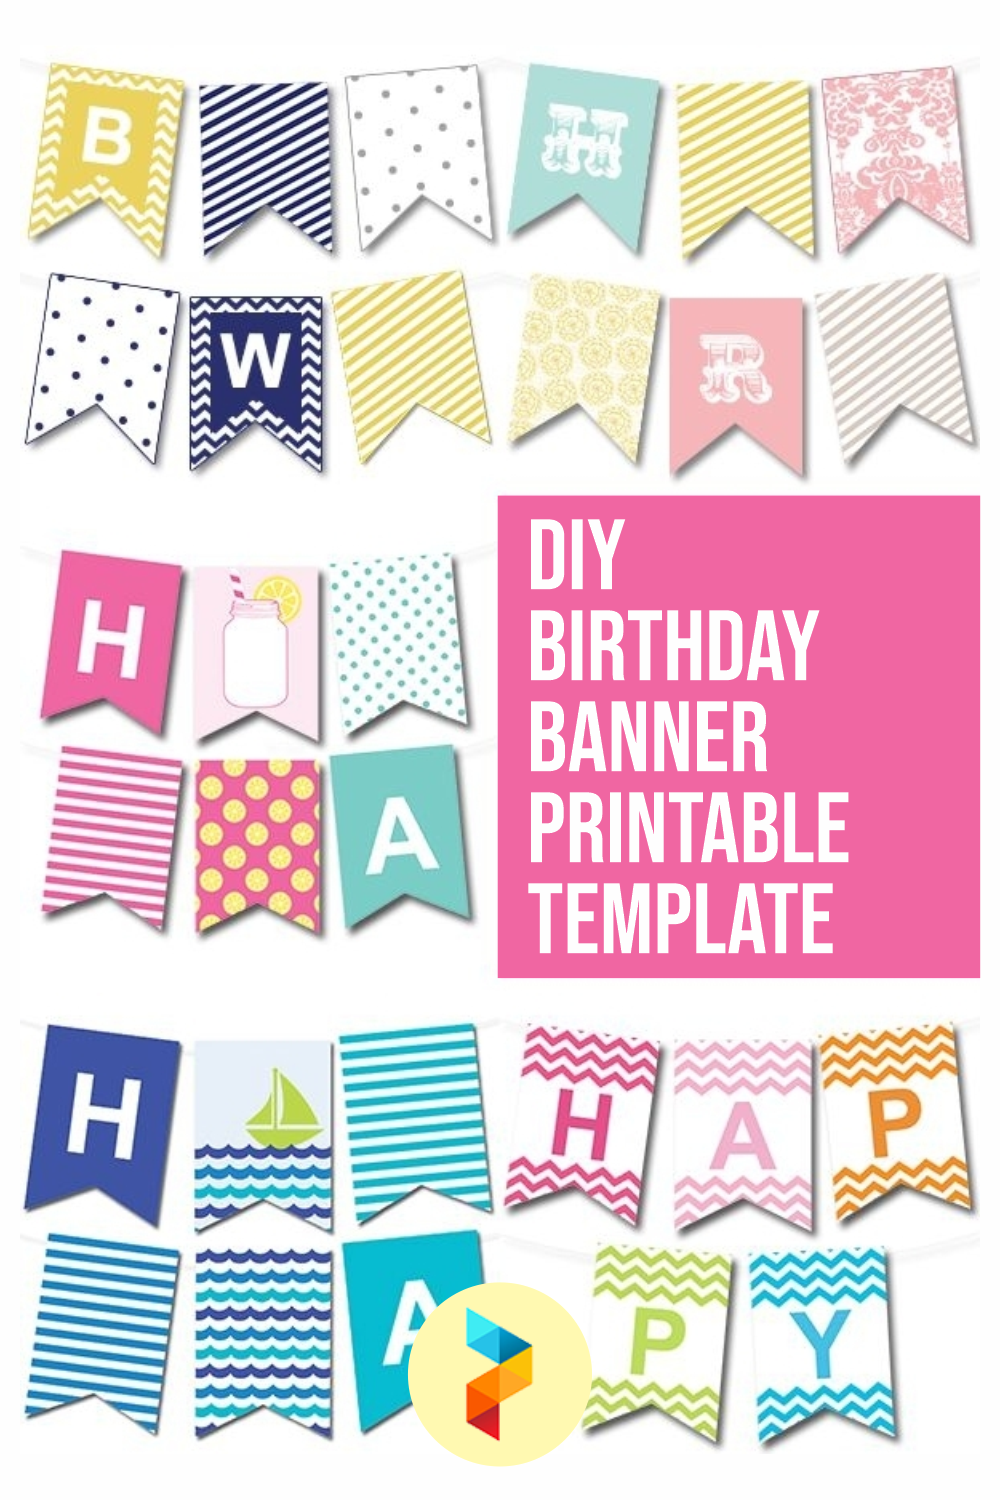 DIY Birthday Banner Printable Template